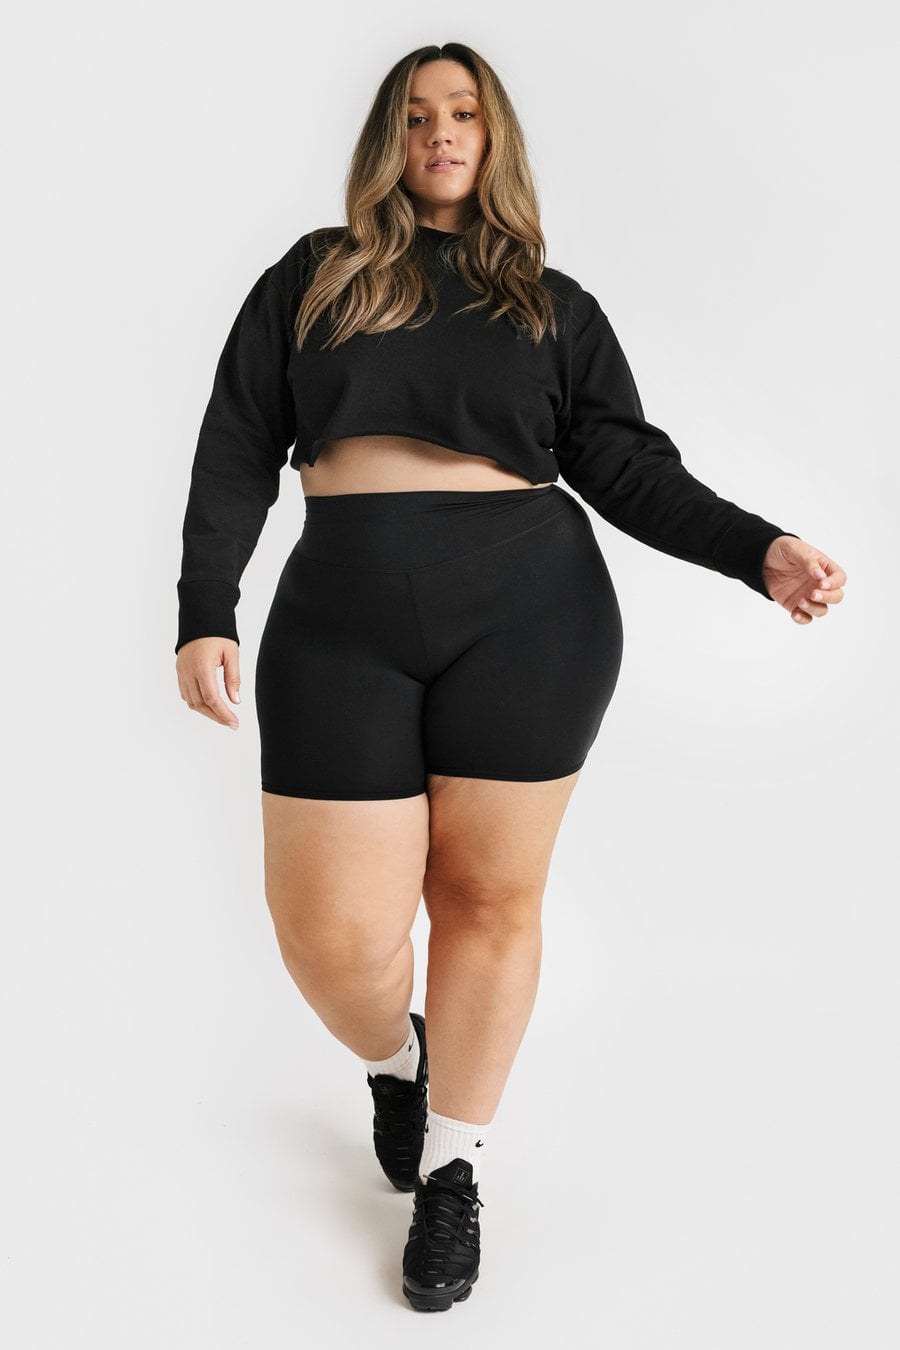 Lexi Shorts – Sexy Sweats